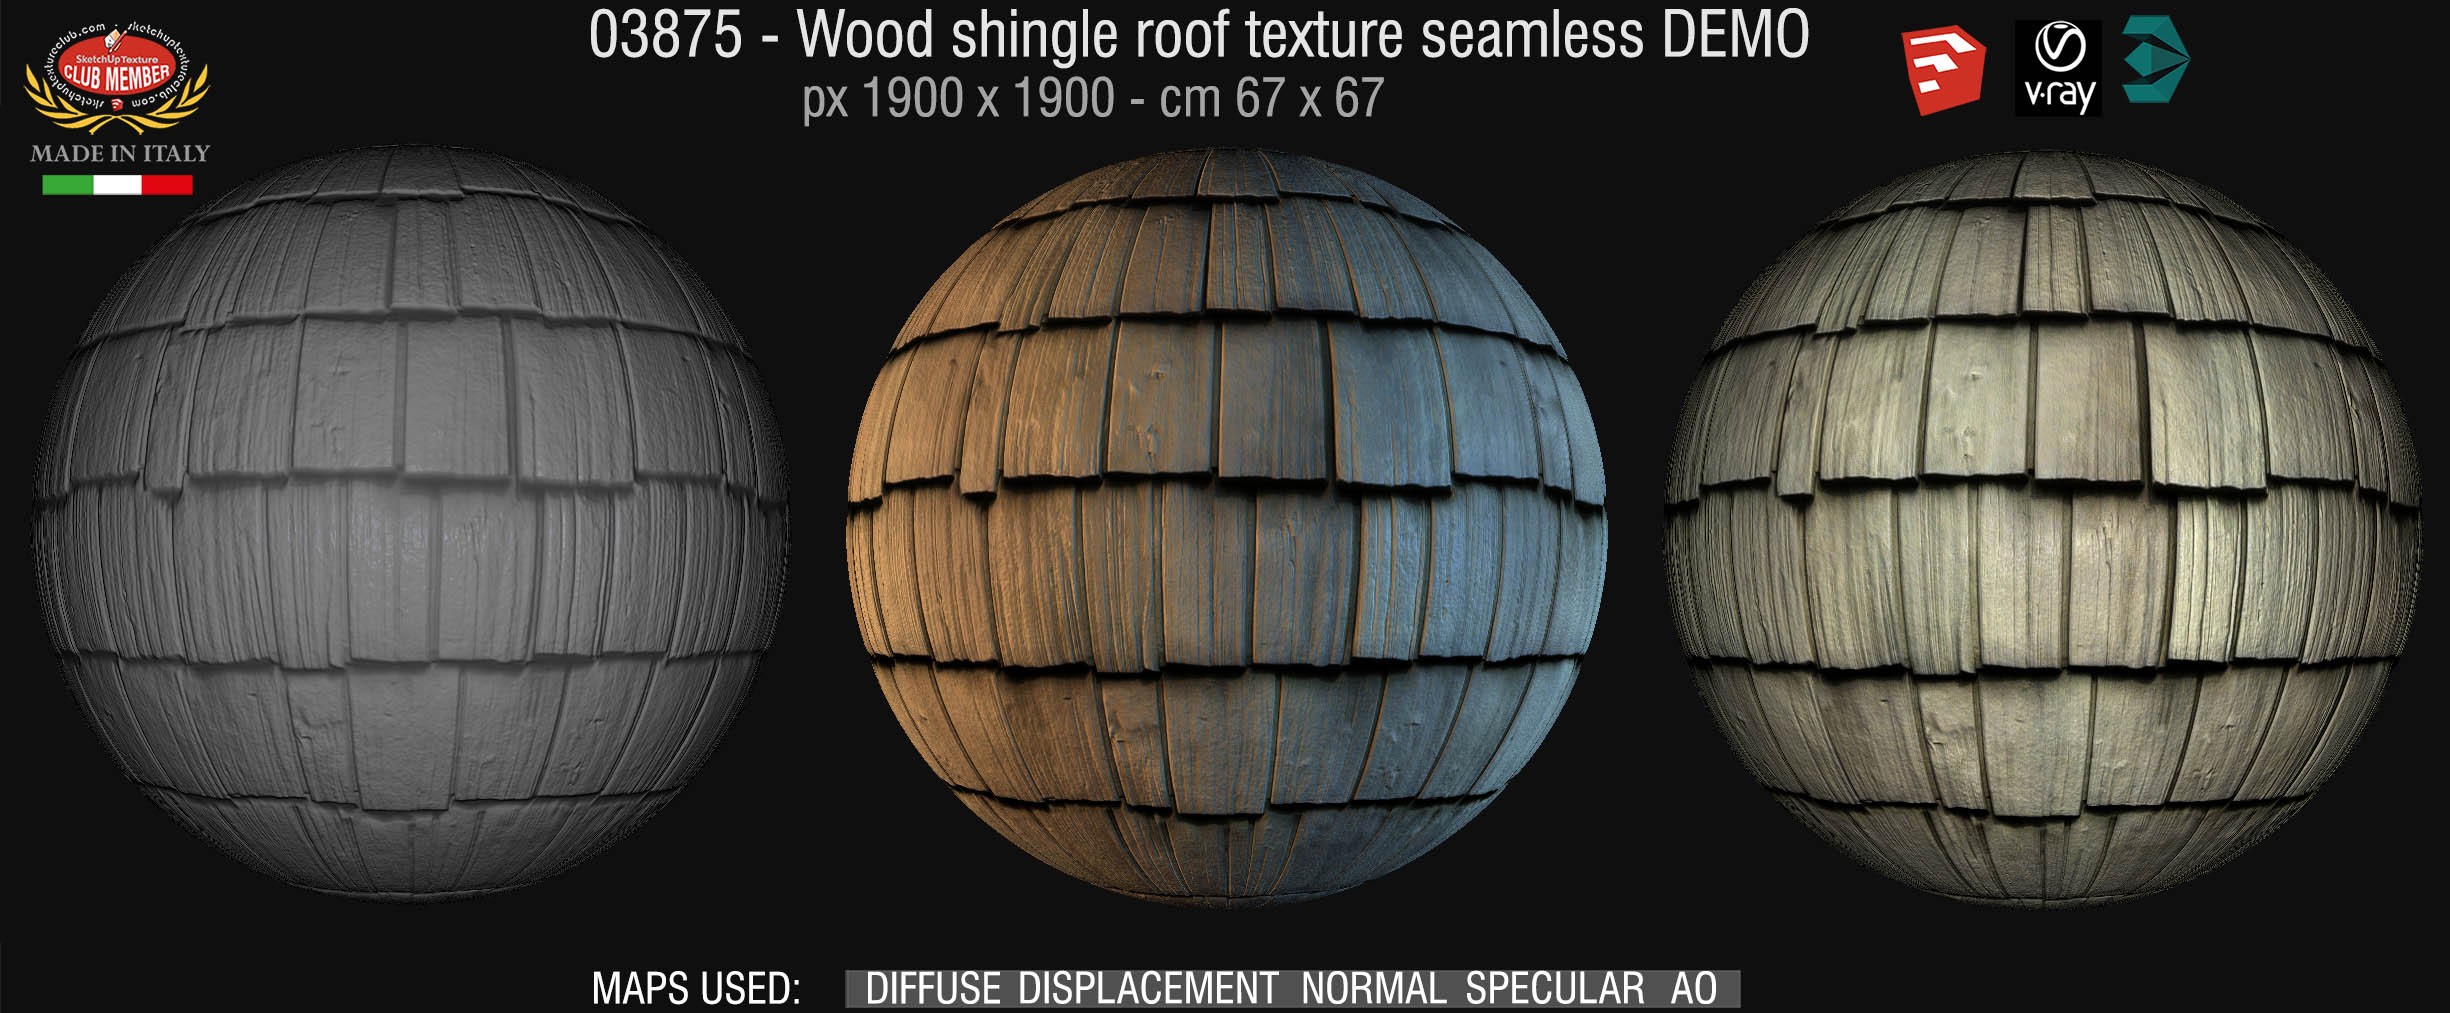 03875 Wood shingle roof texture seamless + maps DEMO